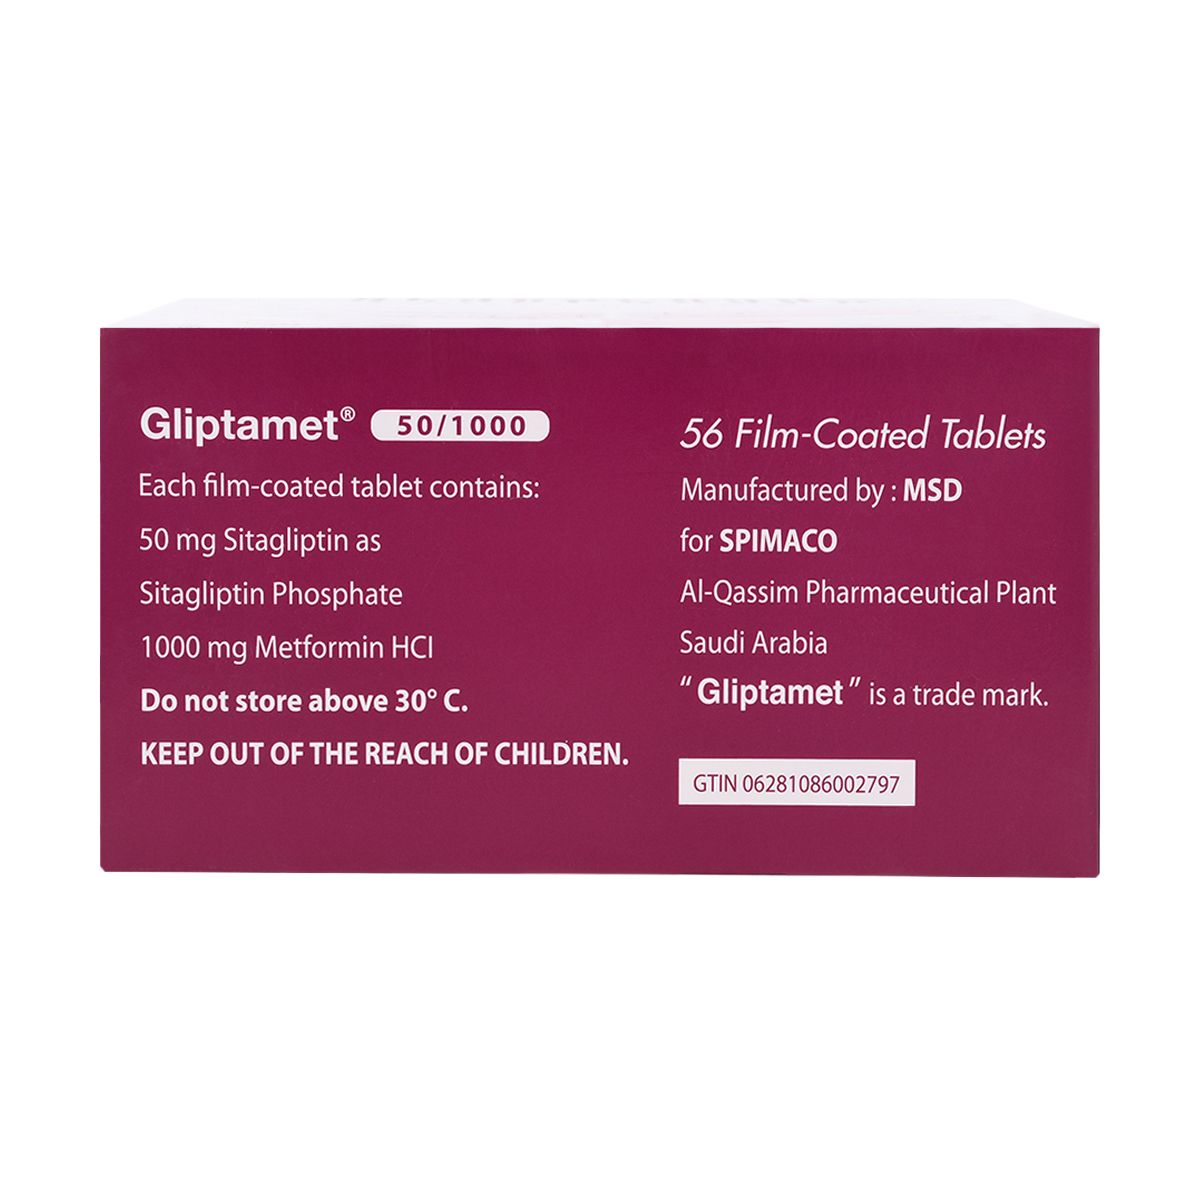 GLIPTAMET Gliptamet 50/1000 mg tab